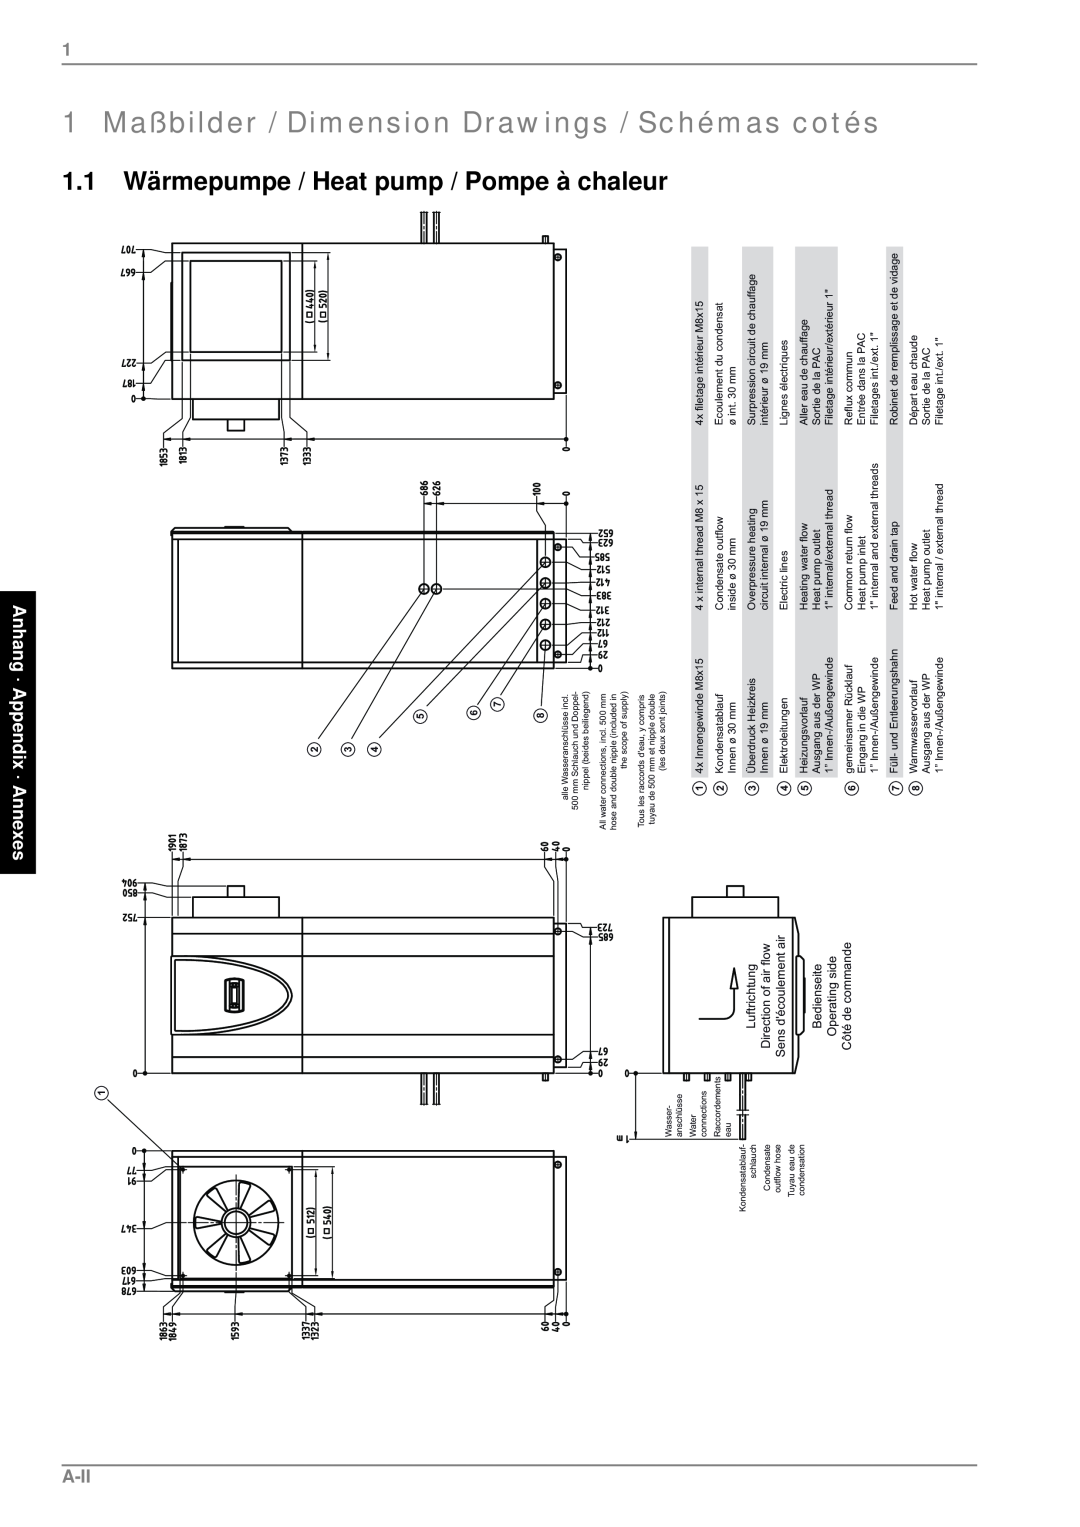 Dimplex LIK 8MER manual Maßbilder / Dimension, Drawings, Schémas cotés, Wärmepumpe / Heat pump, Pompe àchaleur, A-Ii 